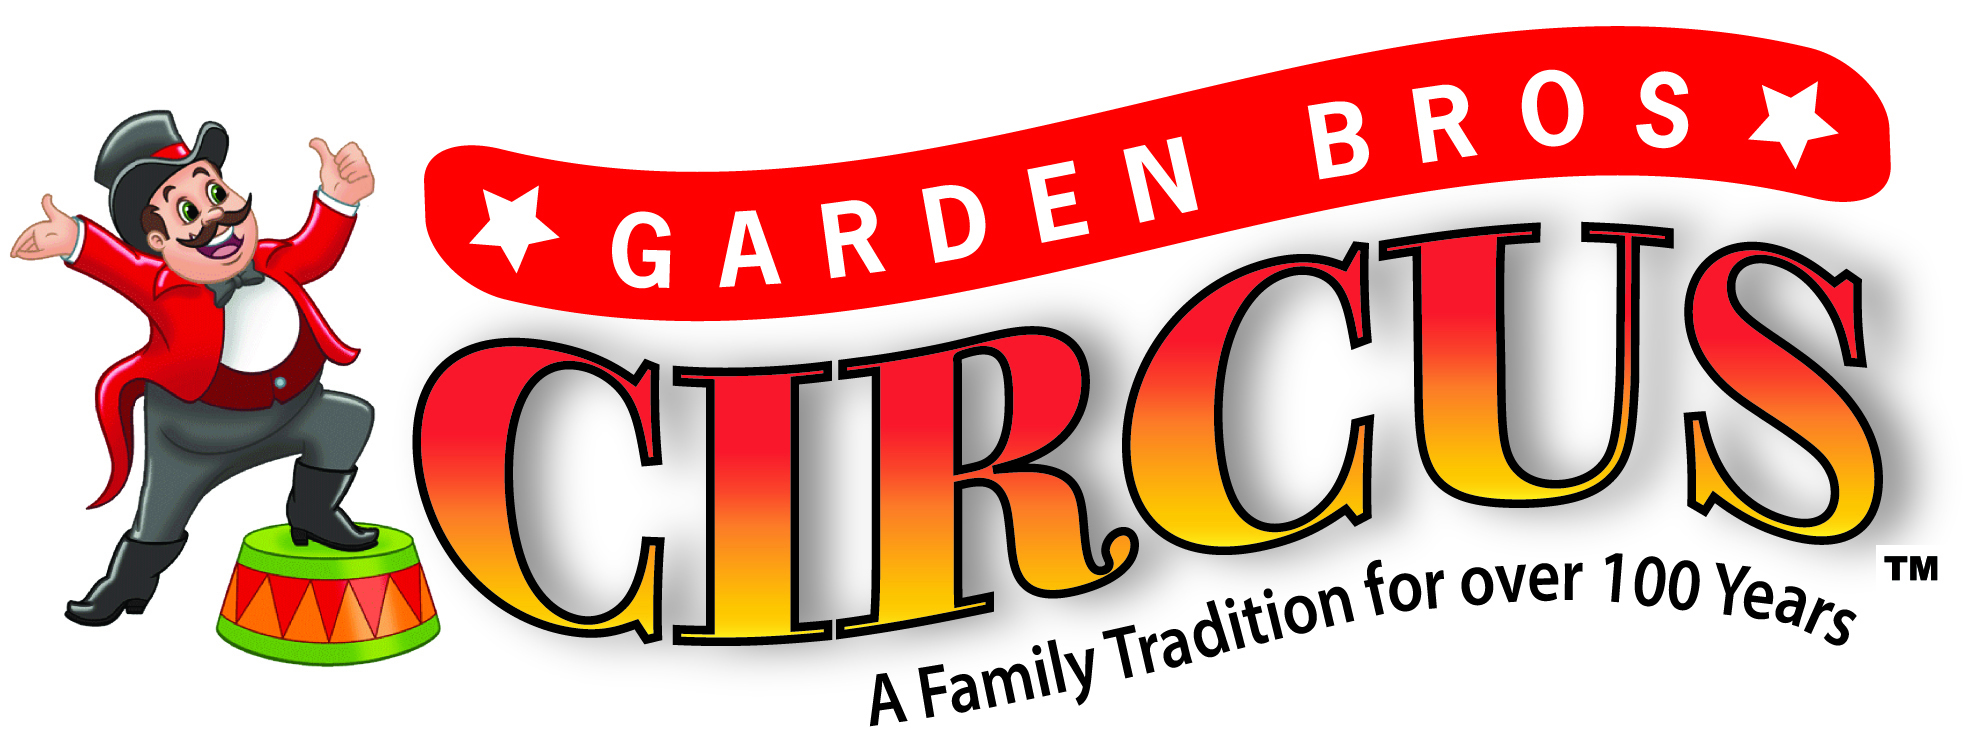 Garden Bros Circus, Montgomery, Texas, United States